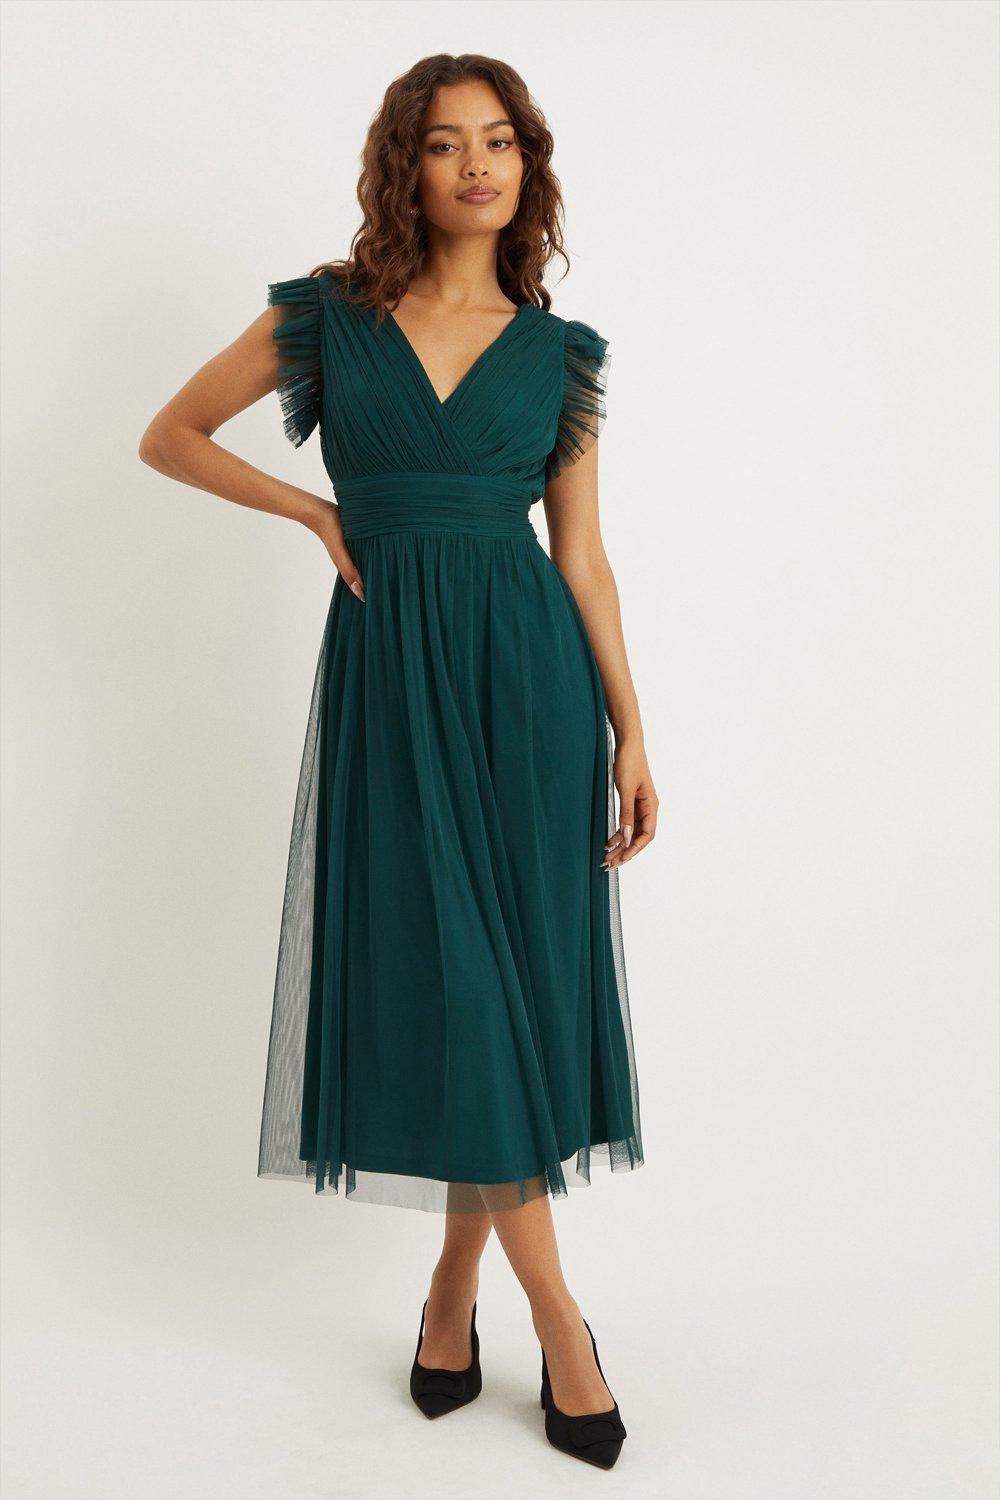 Women’s Petite Green Tulle Midi Dress - 10